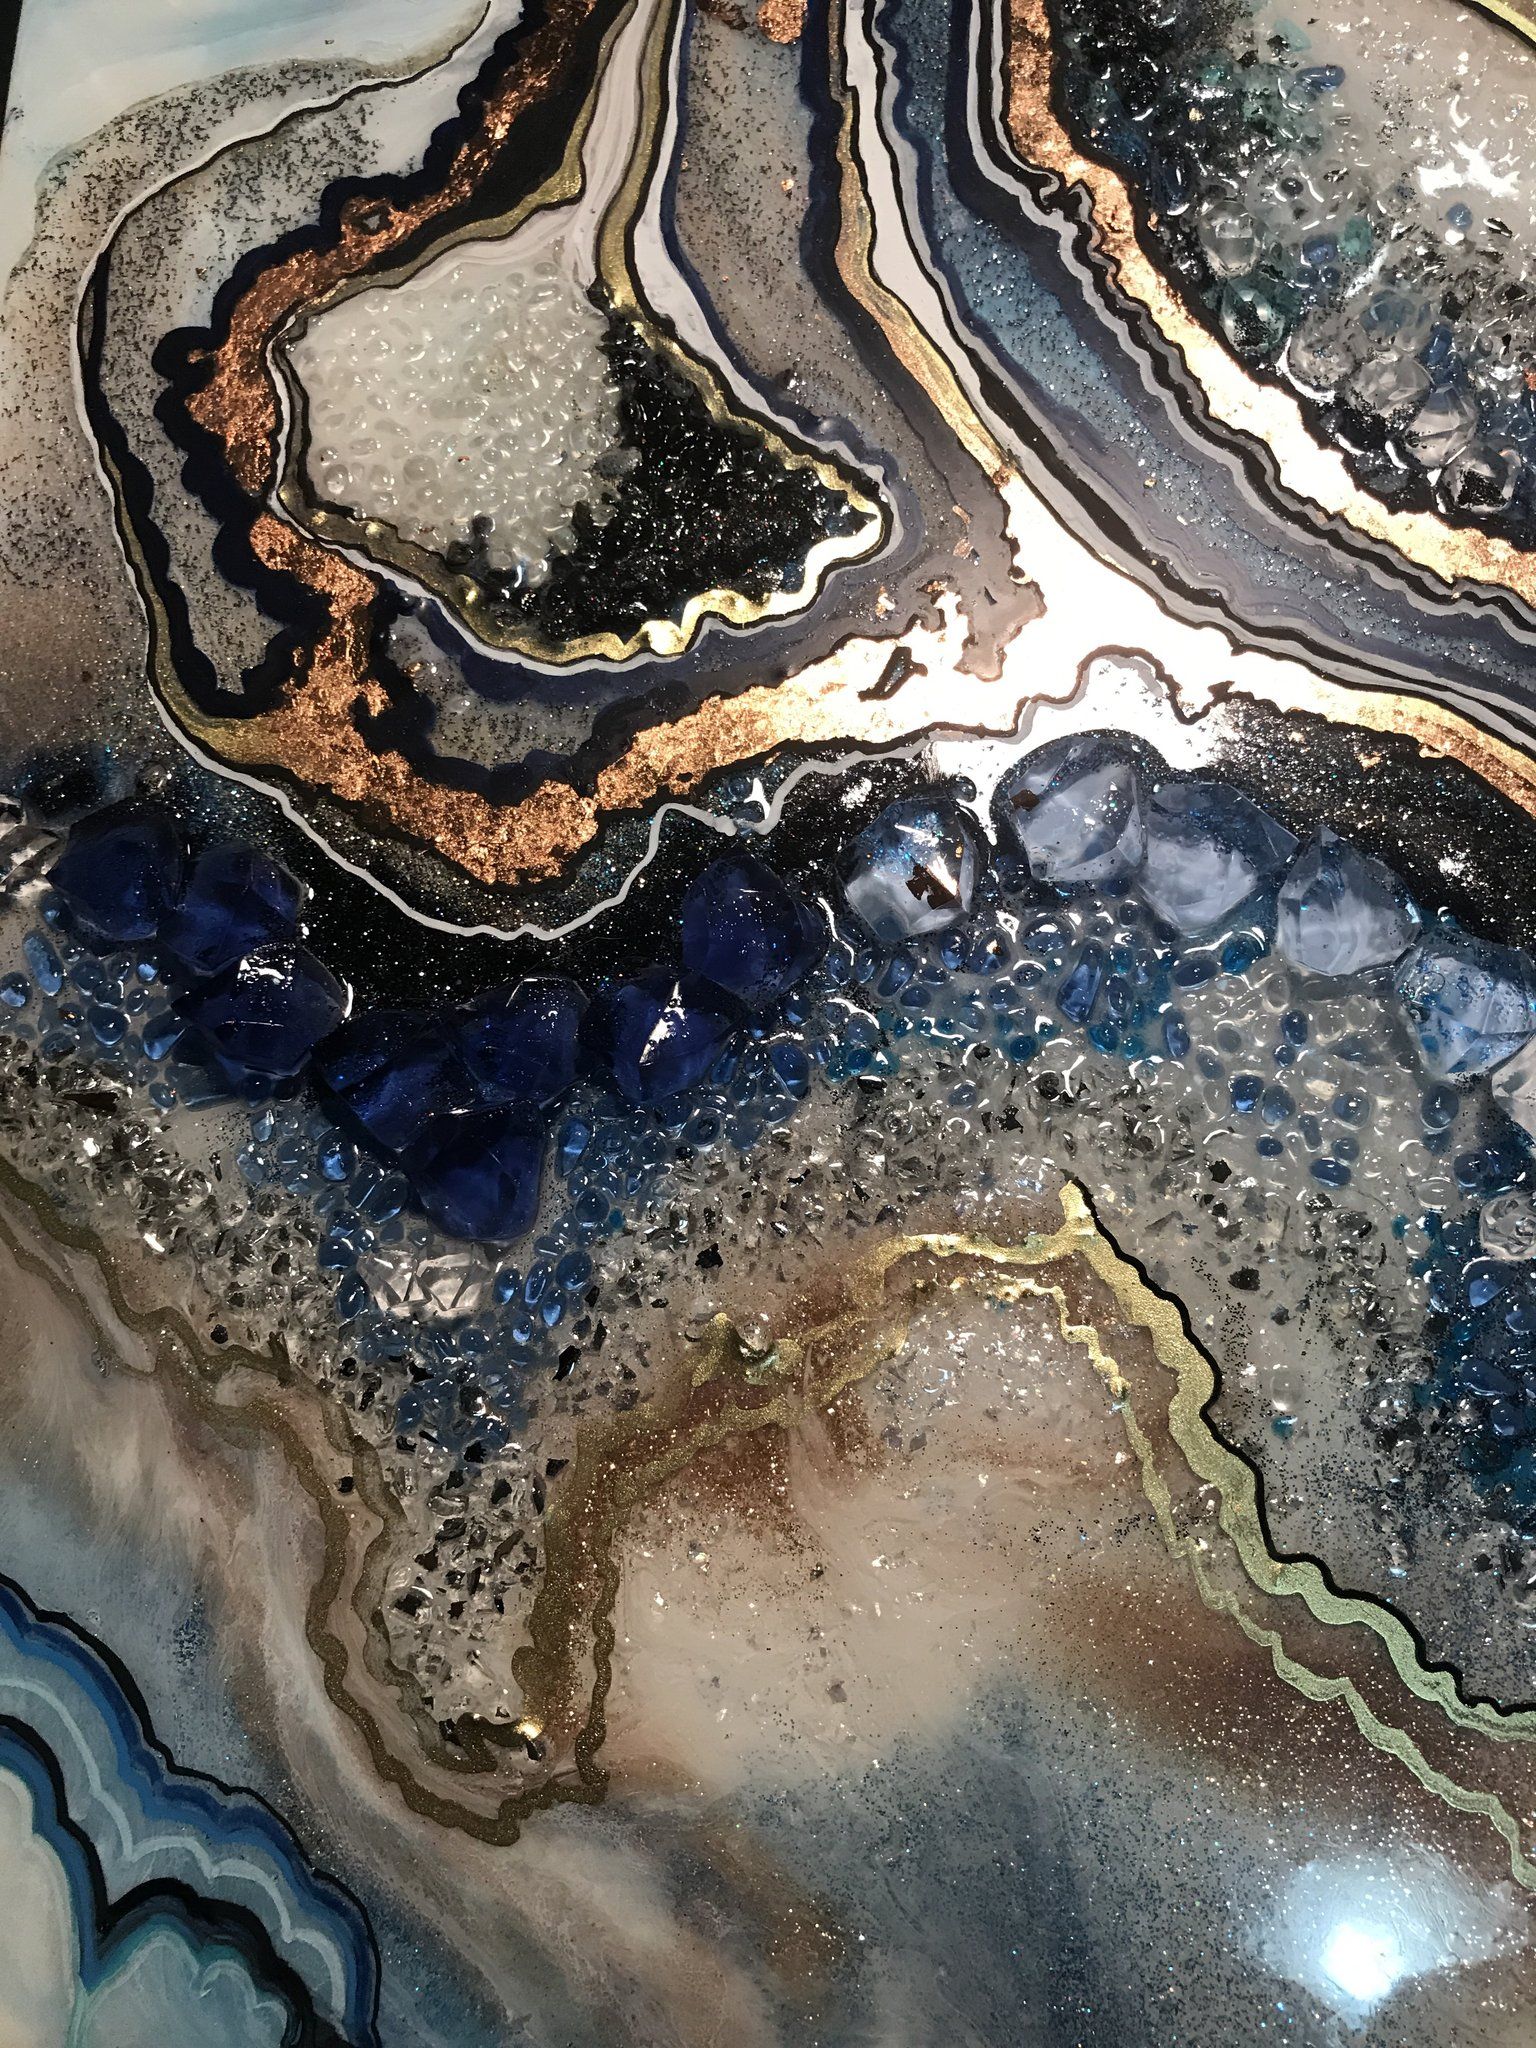 Geode Resin art. Blue and Gold Original Crystal Artwork Commission. Geode art, Resin art, Resin artwork